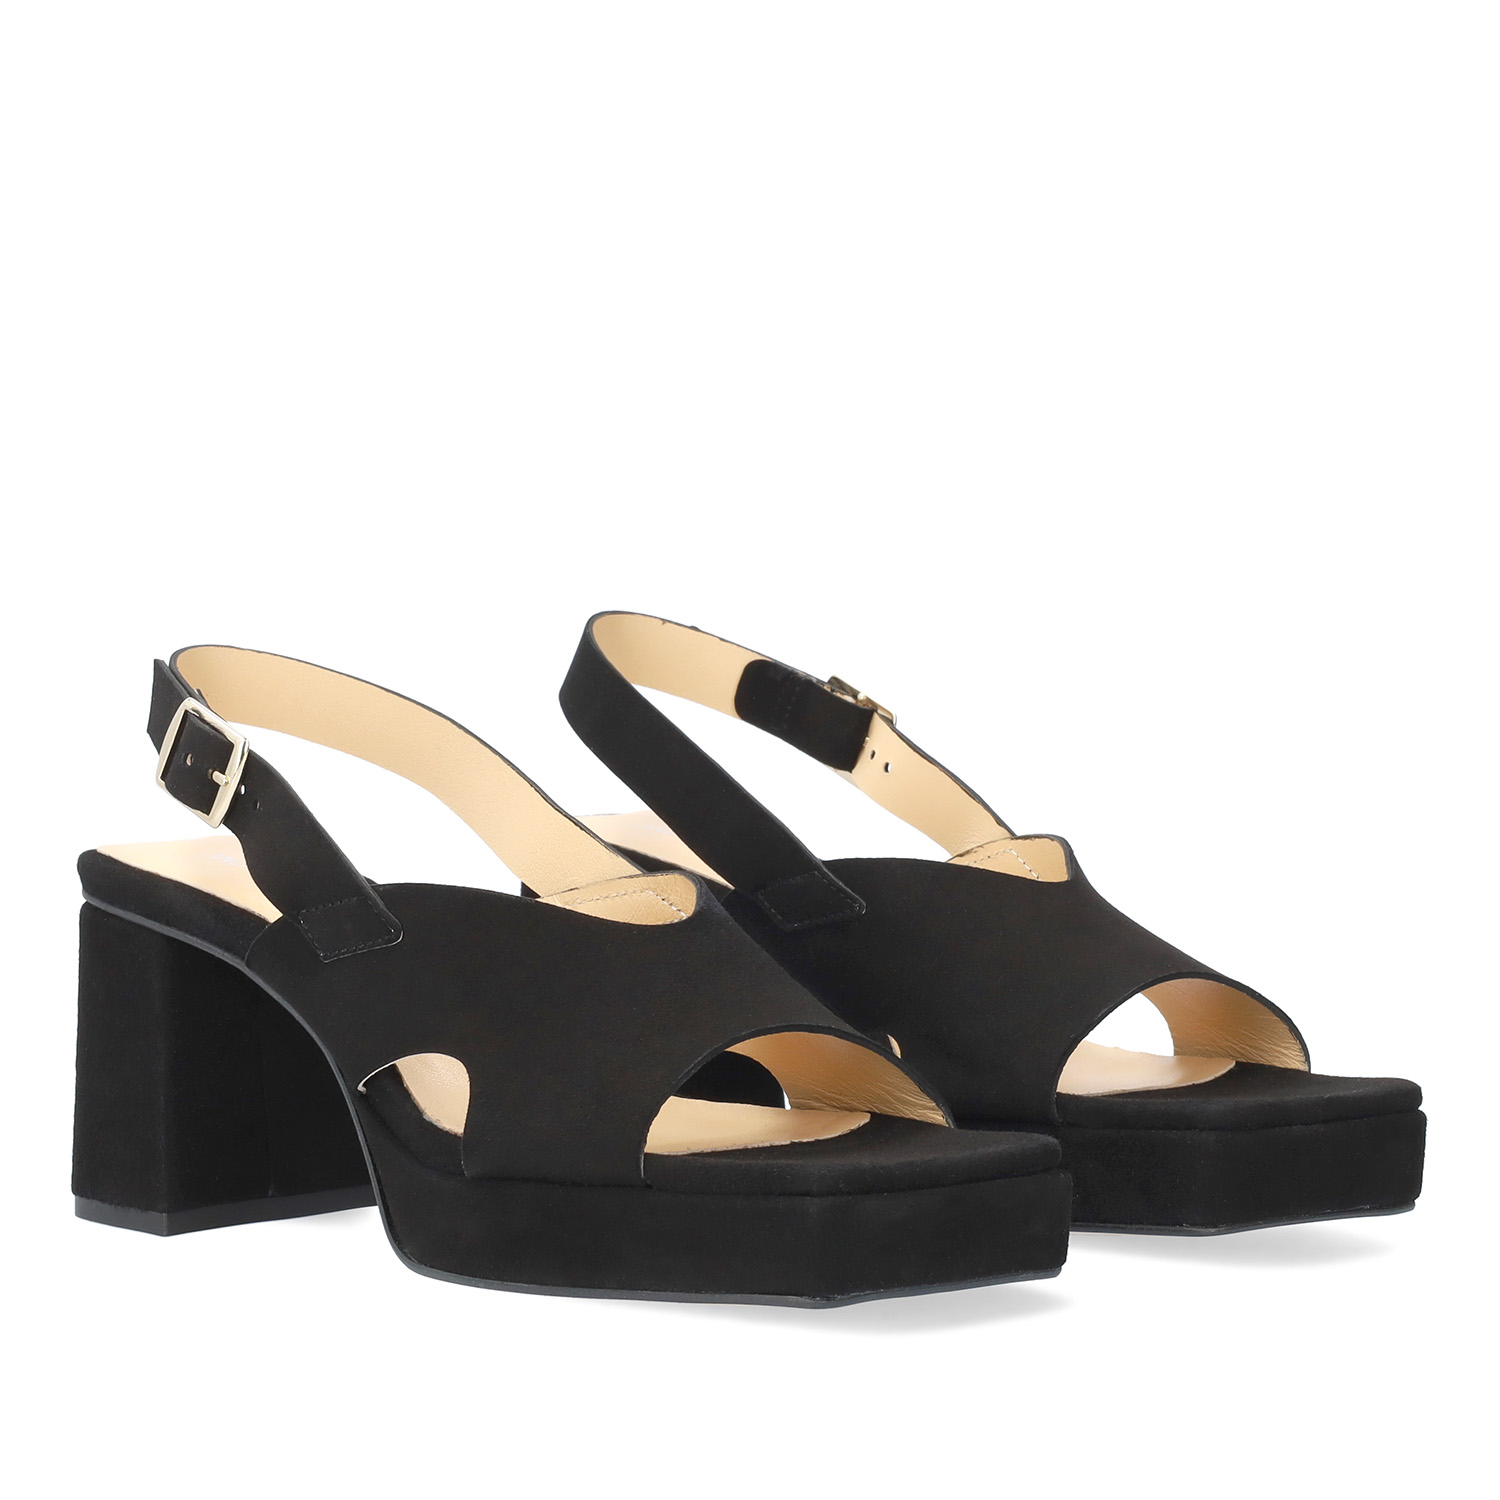 Heeled black suede sandals with platform 